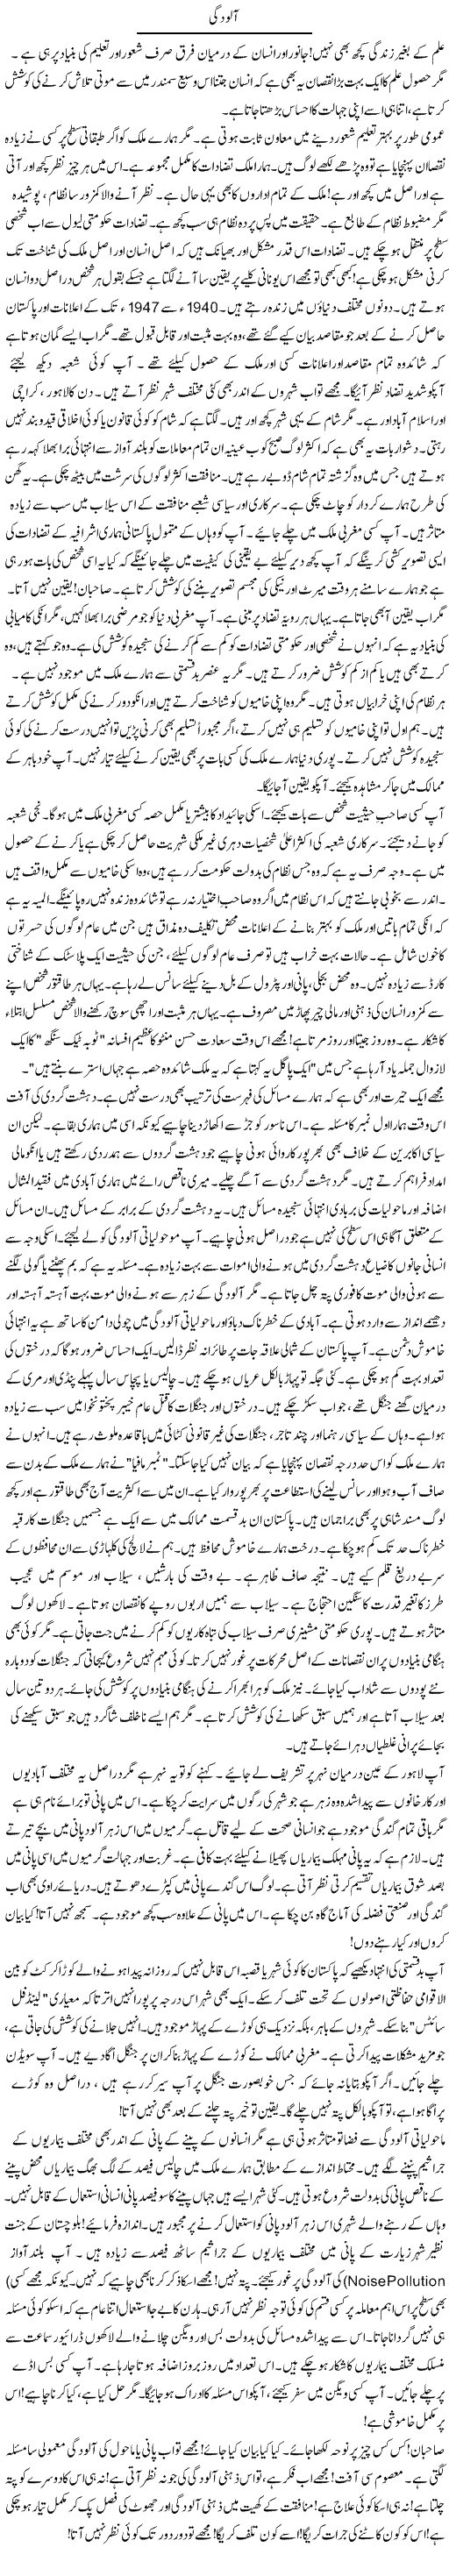 Aloodgi | Rao Manzar Hayat | Daily Urdu Columns